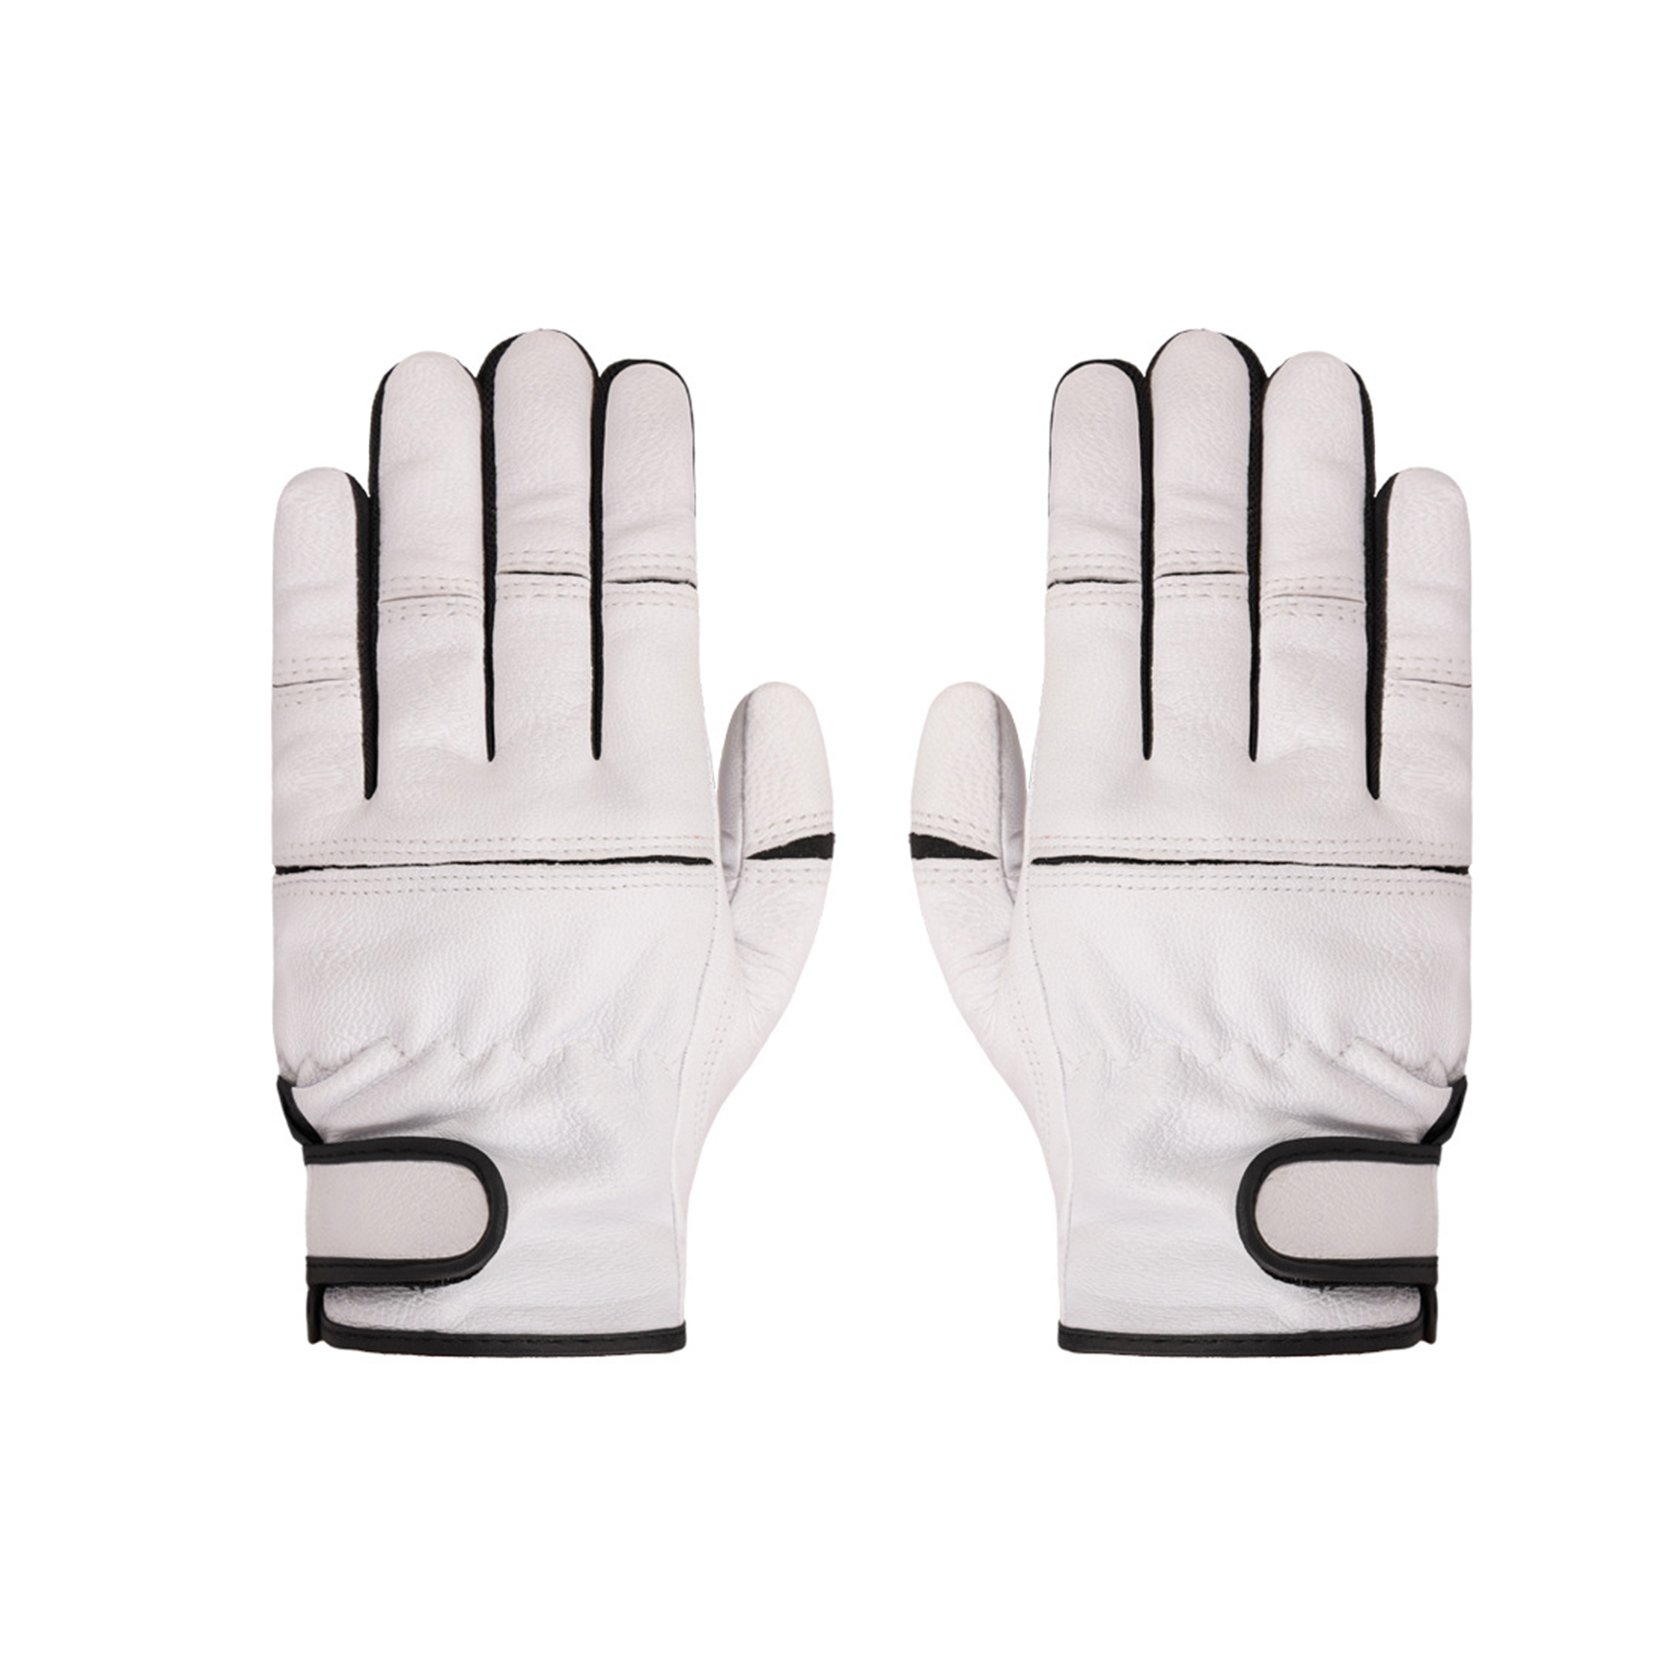 Kub Muag Sheepskin Leather Premium Unlined Safety Tool Work Gloves Siv hnab looj tes